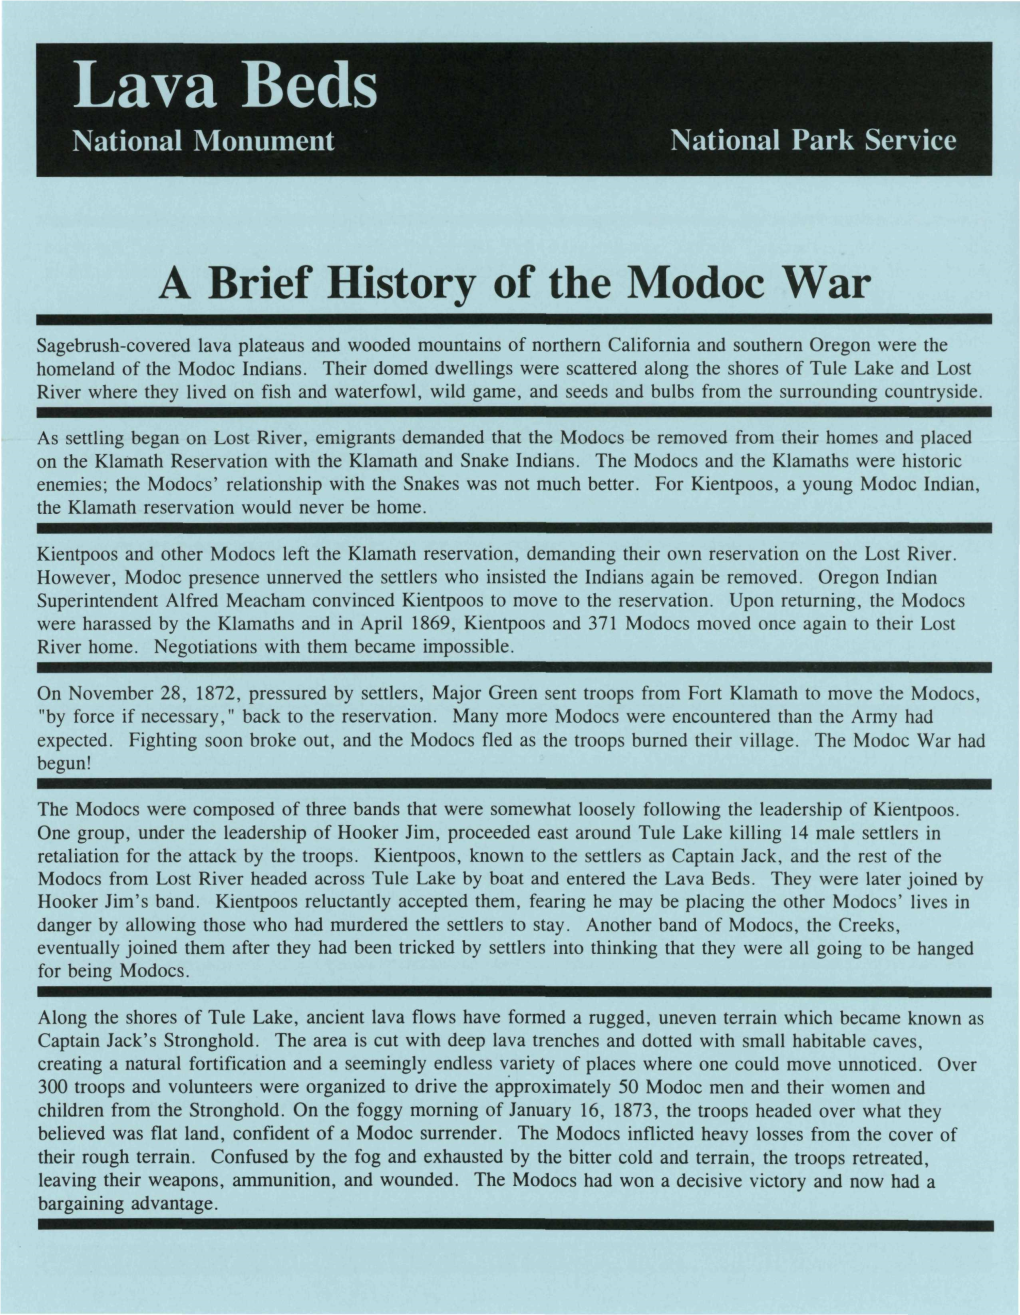 A Brief History of the Modoc War